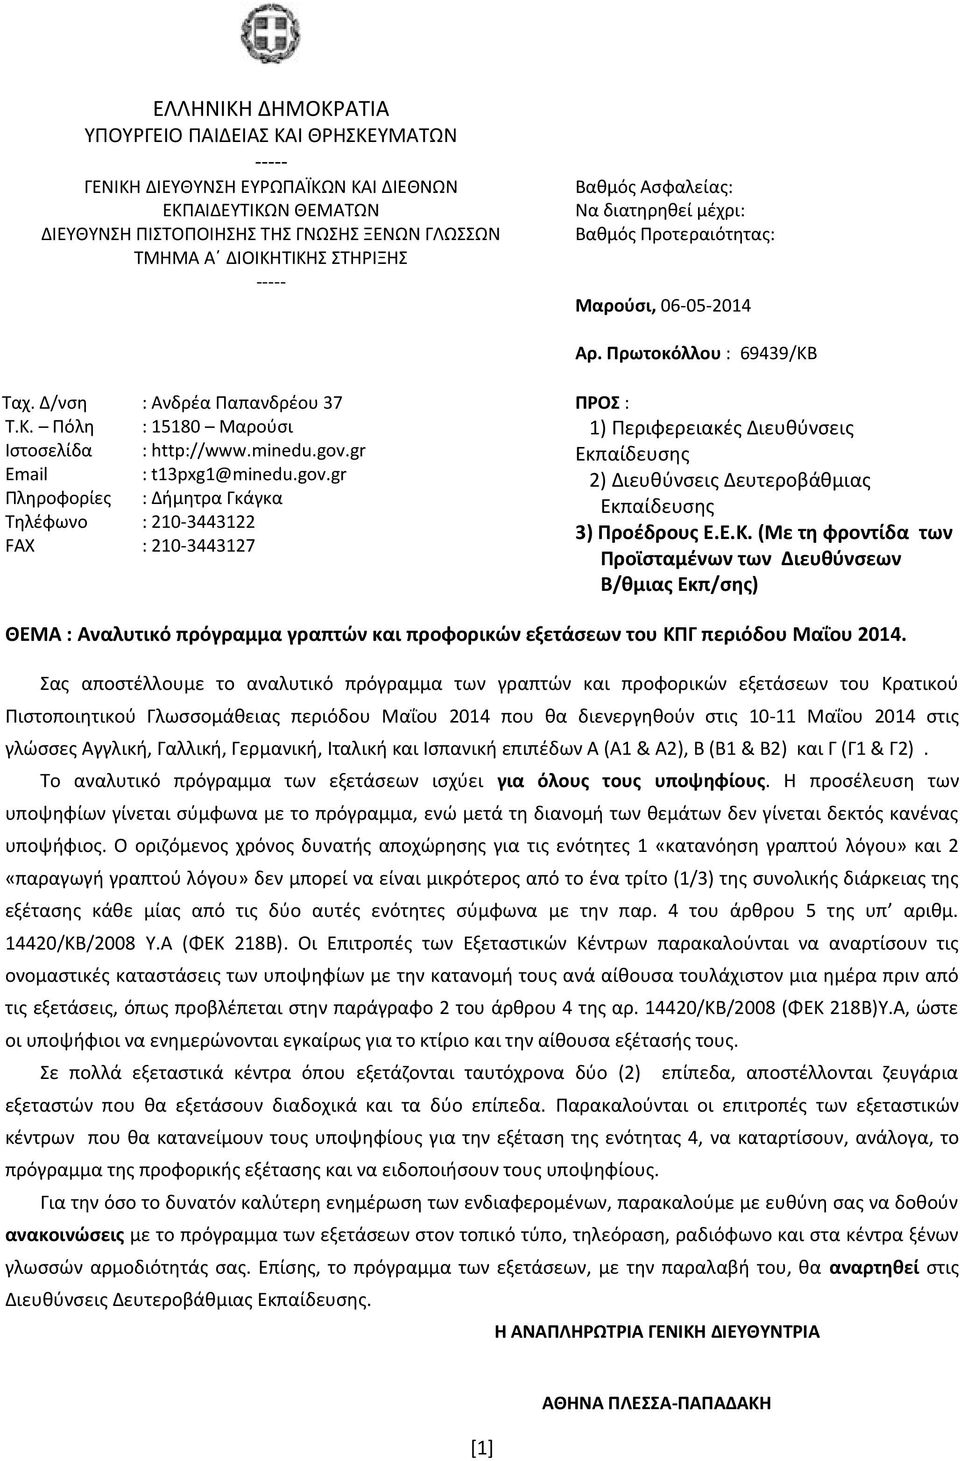 minedu.gov.gr Email : t13pxg1@minedu.gov.gr Πληροφορίες : Δήμητρα Γκάγκα Τηλέφωνο : 210-3443122 FAX : 210-3443127 ΠΡΟΣ : 1) Περιφερειακές Διευθύνσεις Εκπαίδευσης 2) Διευθύνσεις Δευτεροβάθμιας Εκπαίδευσης 3) Προέδρους Ε.